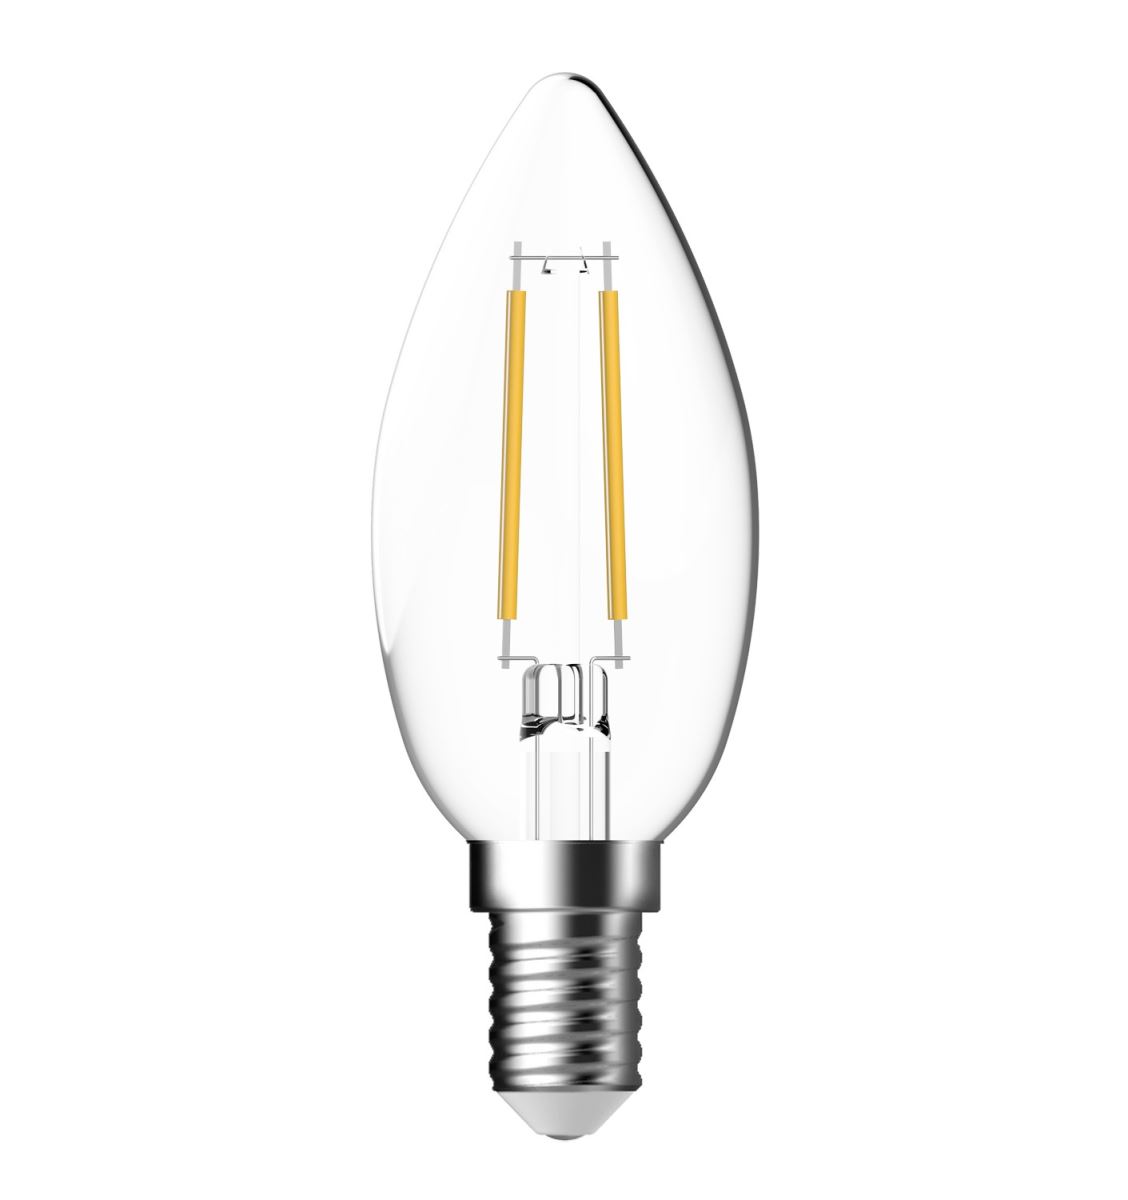 Nordlux Energetic LED Leuchtmittel E14 C35 Filament klar 470lm 2700K 4,8W 80Ra 360° dimmbar 3,5x3,5x9,7cm von Energetic